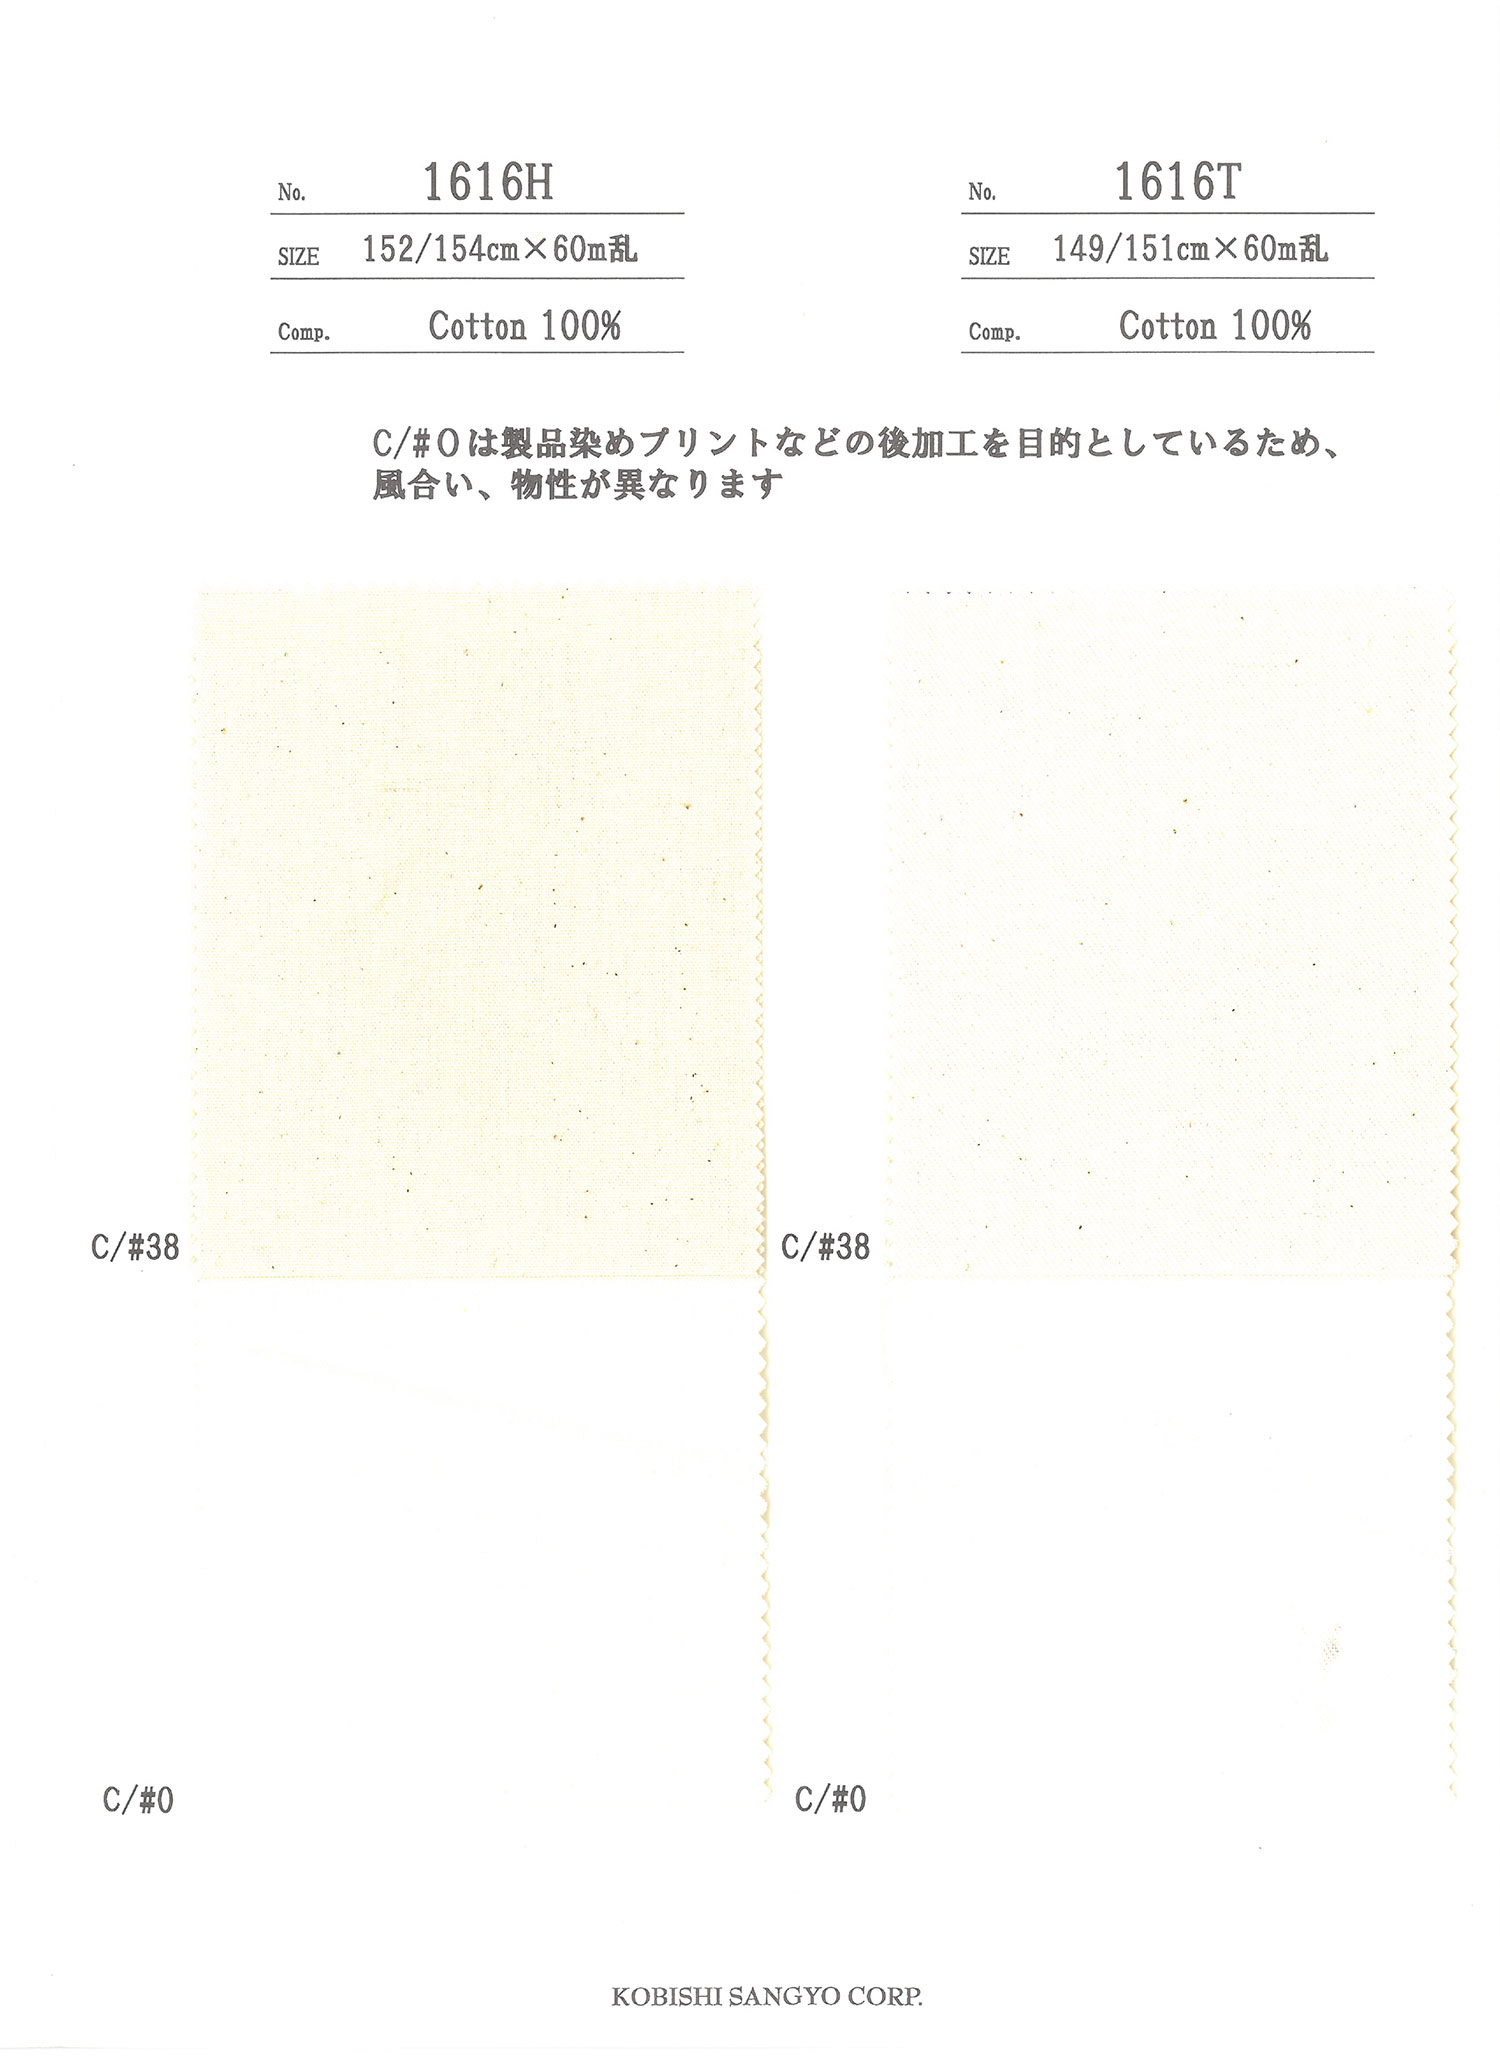 1616T Taschenfutter Aus Dick Gewebtem Köpergewebe Ueyama Textile